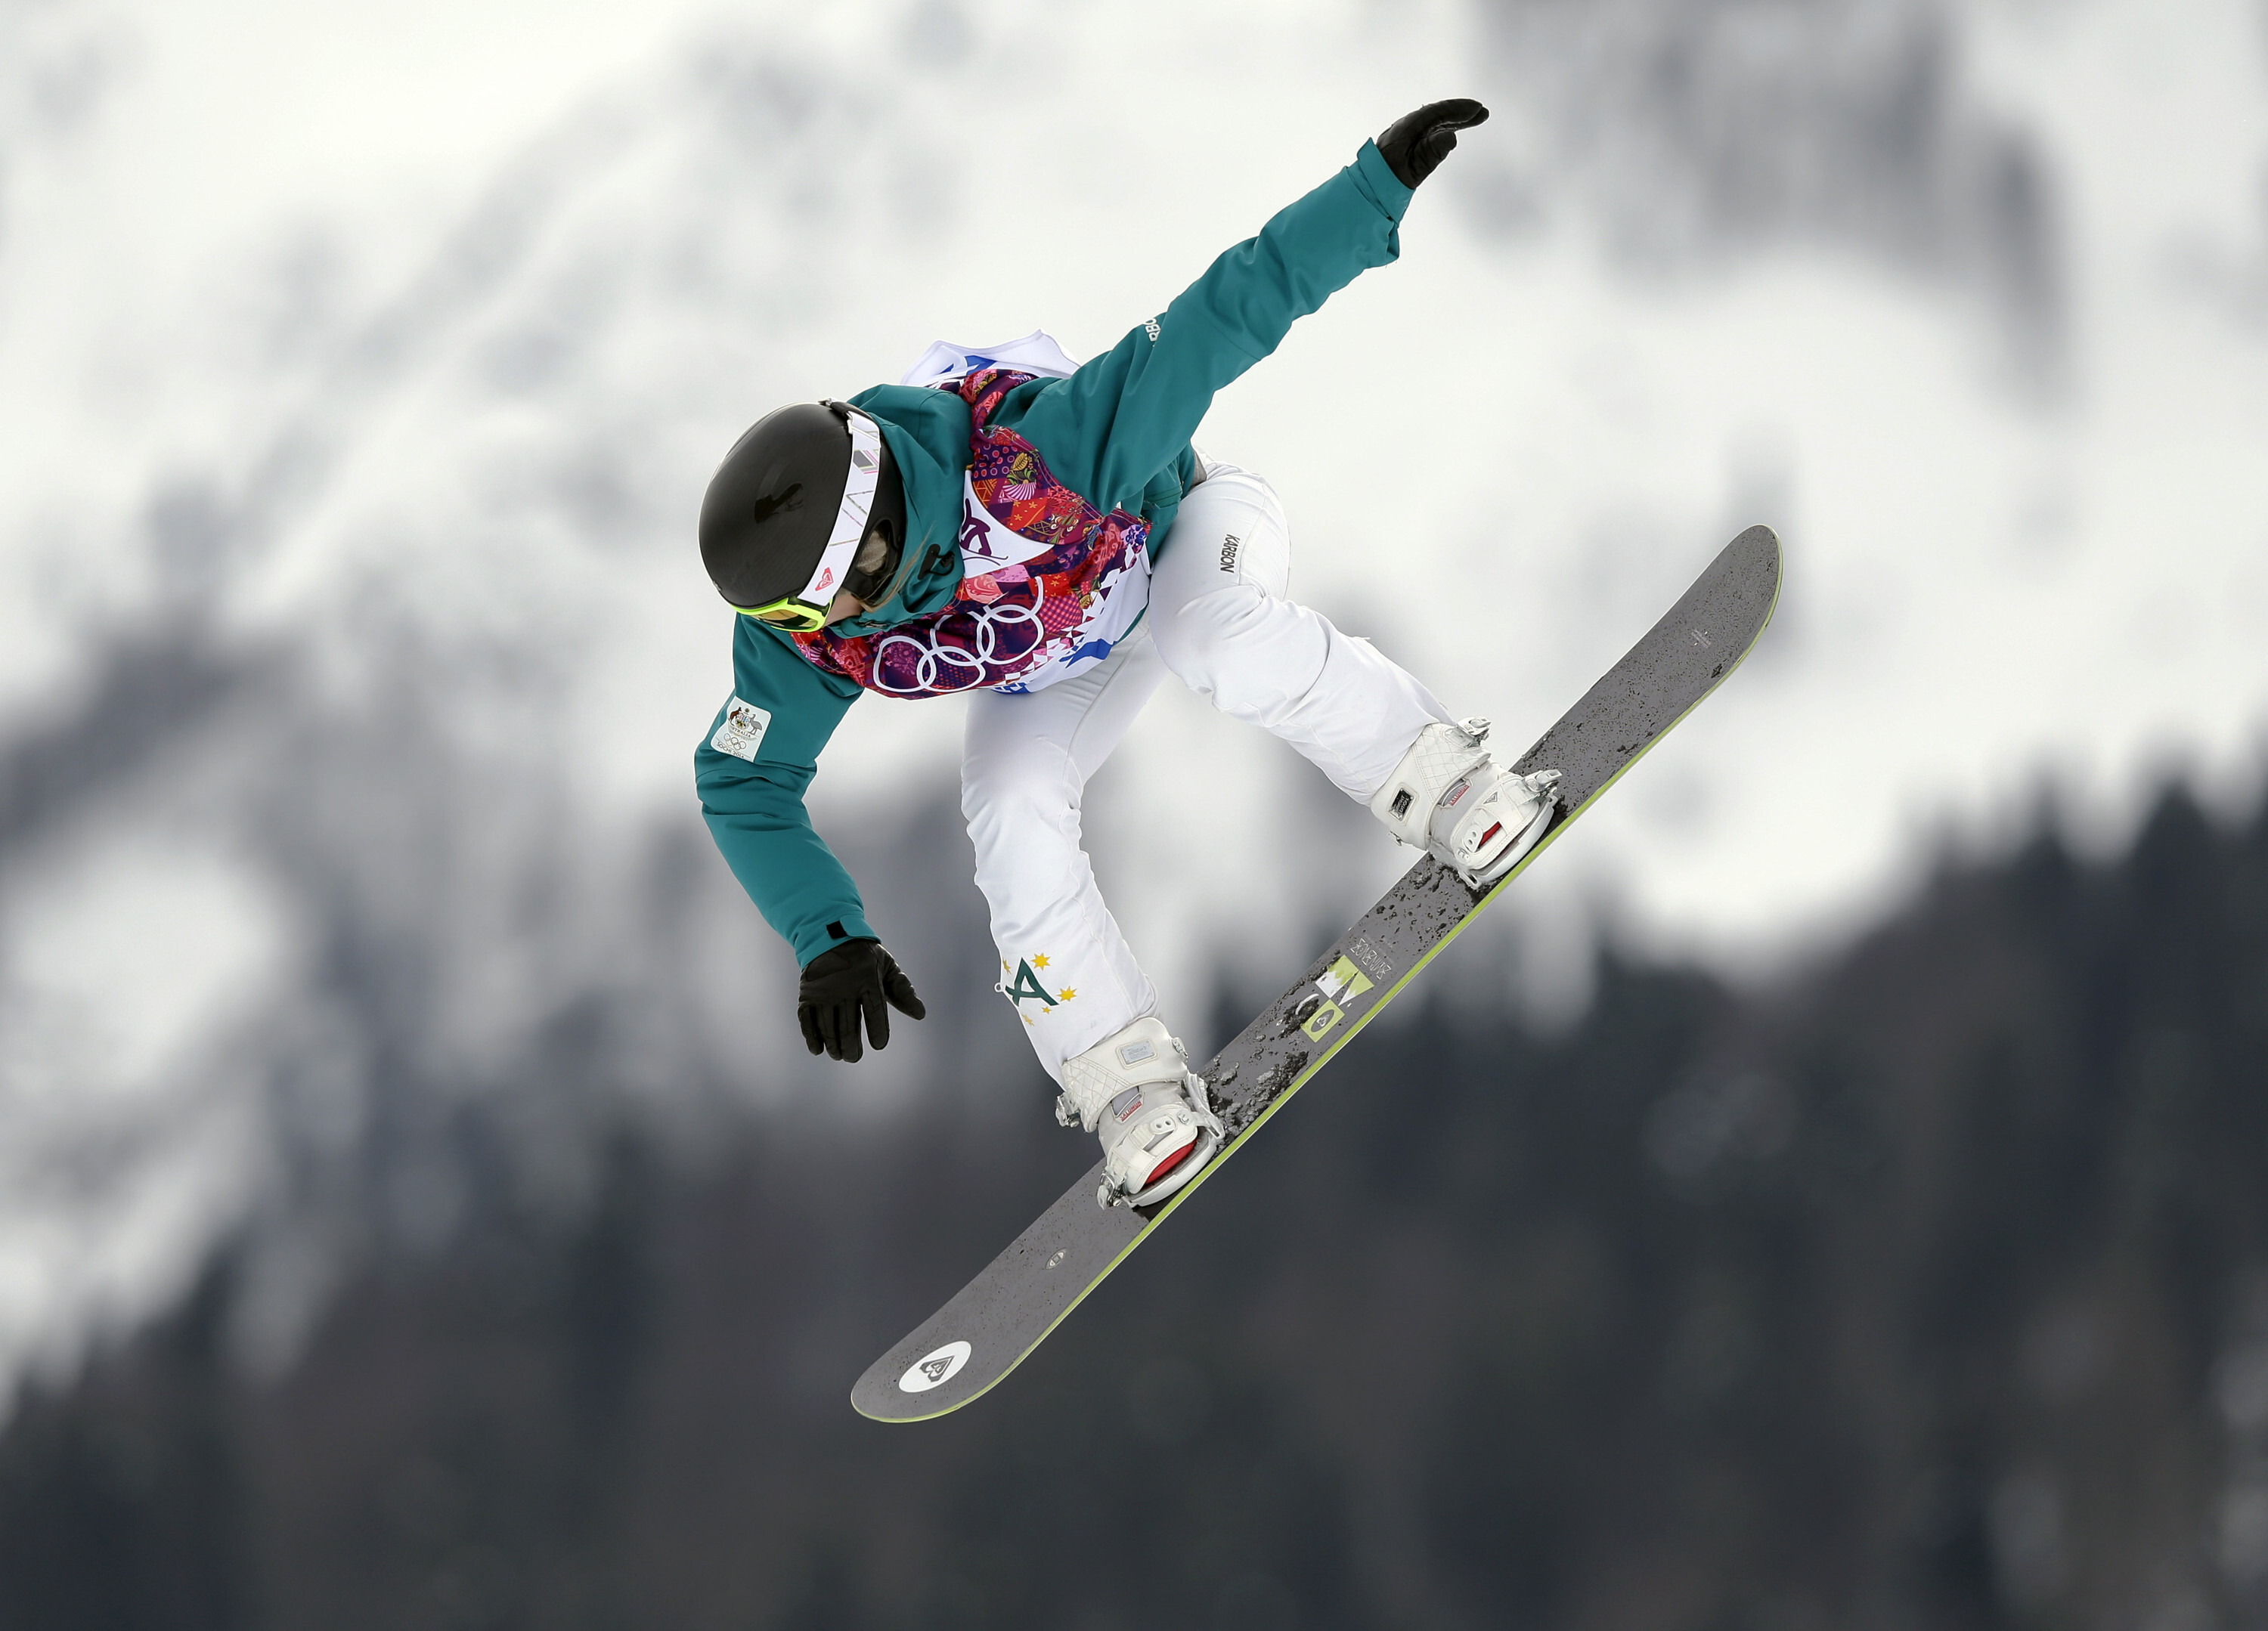 10 советов начинающим сноубордистам